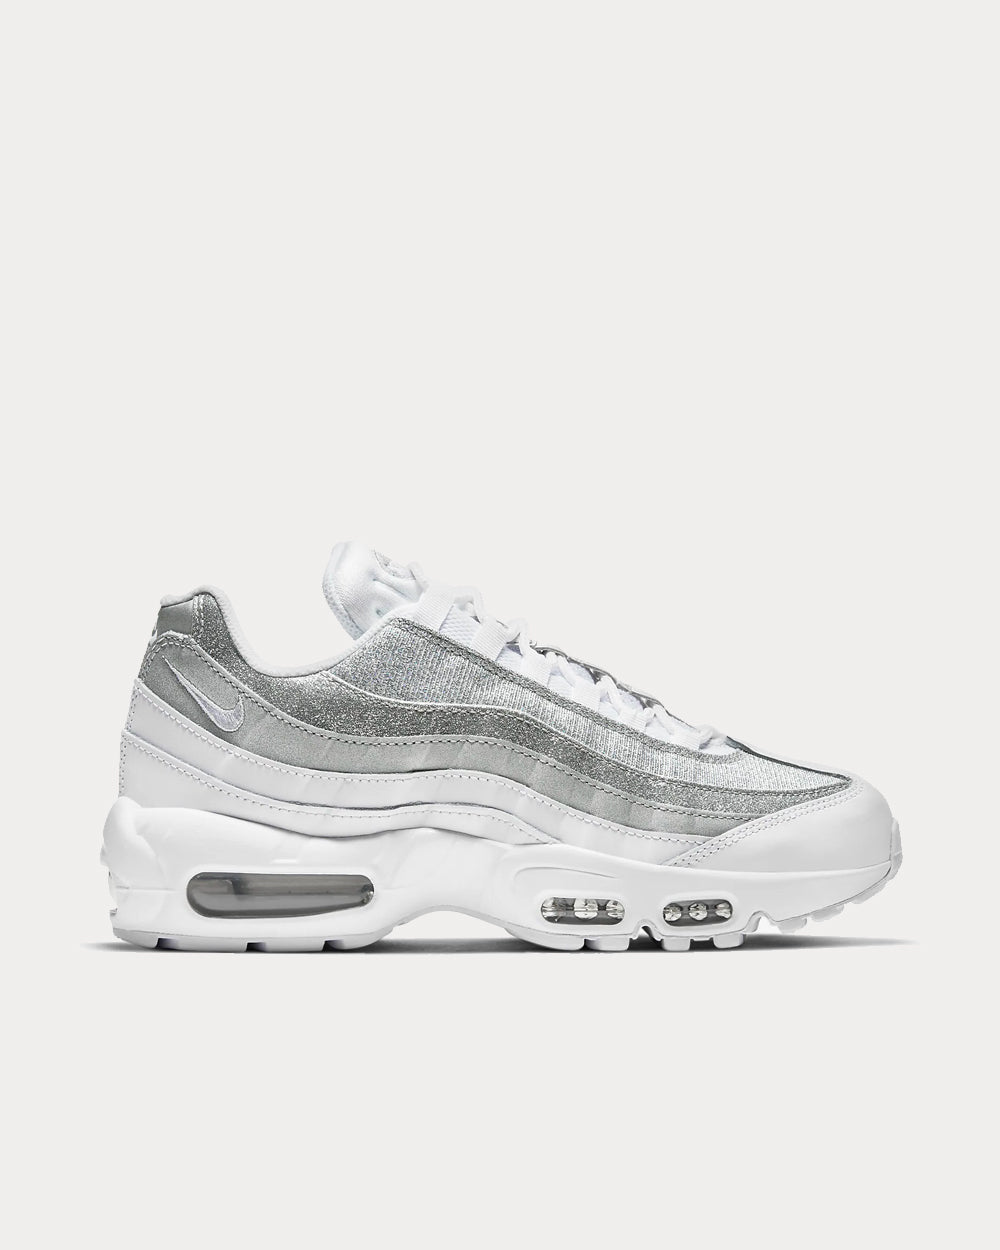 Nike 95 White/Metallic Silver Low Top Sneakers - Sneak in